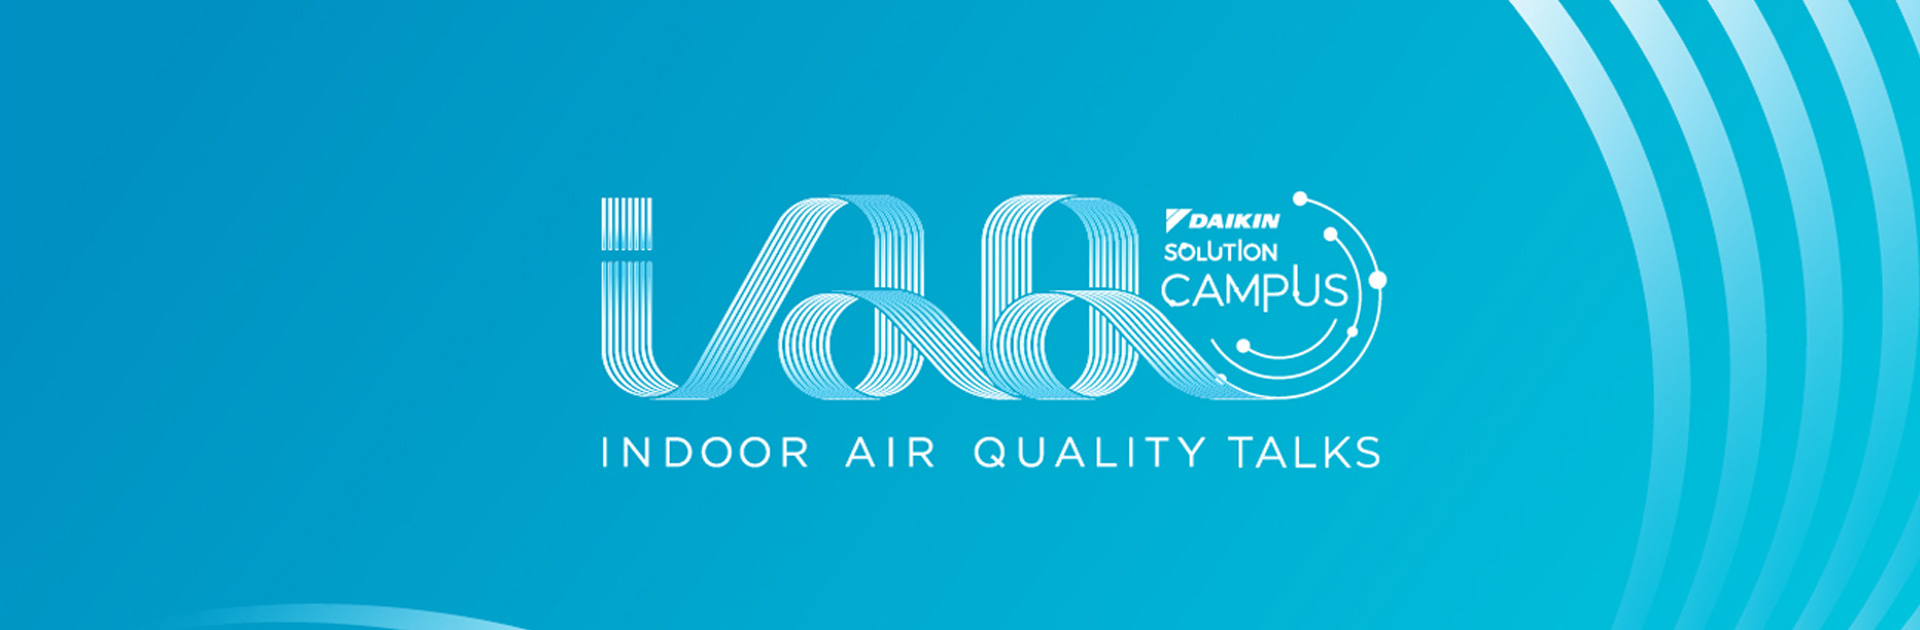 Indoor Air Quality Talks – Daikin Solution Campus